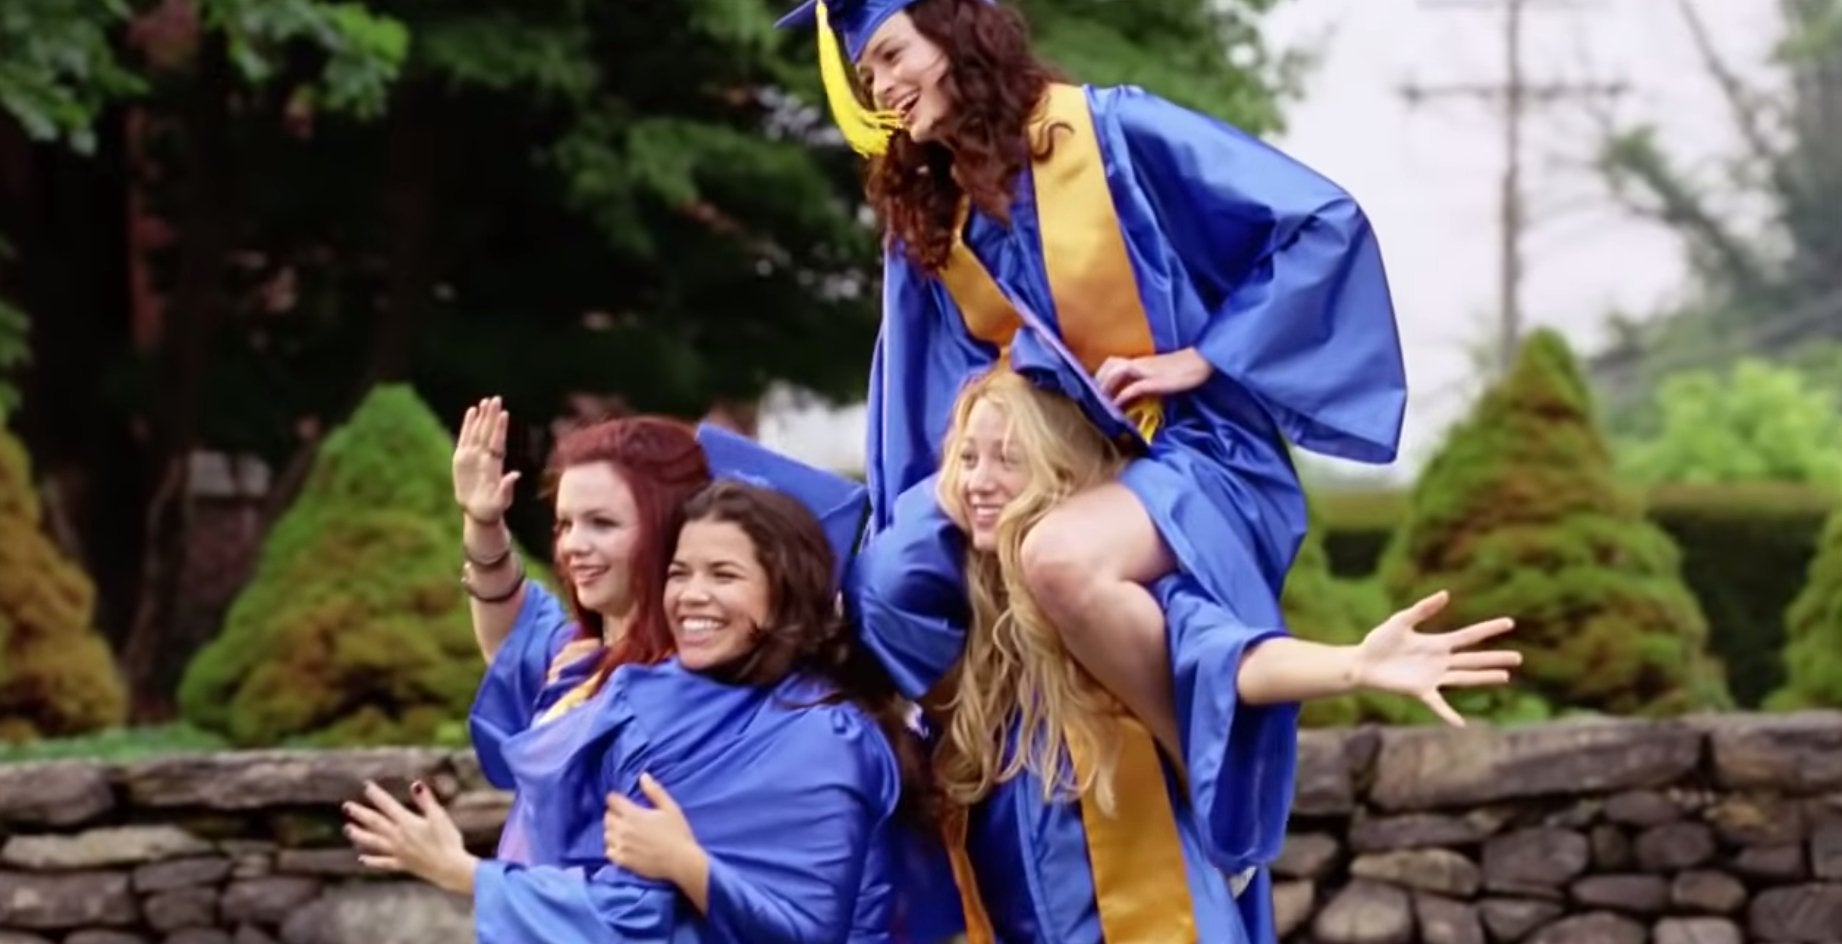 The Sisterhood of the Traveling Pants graduation scene